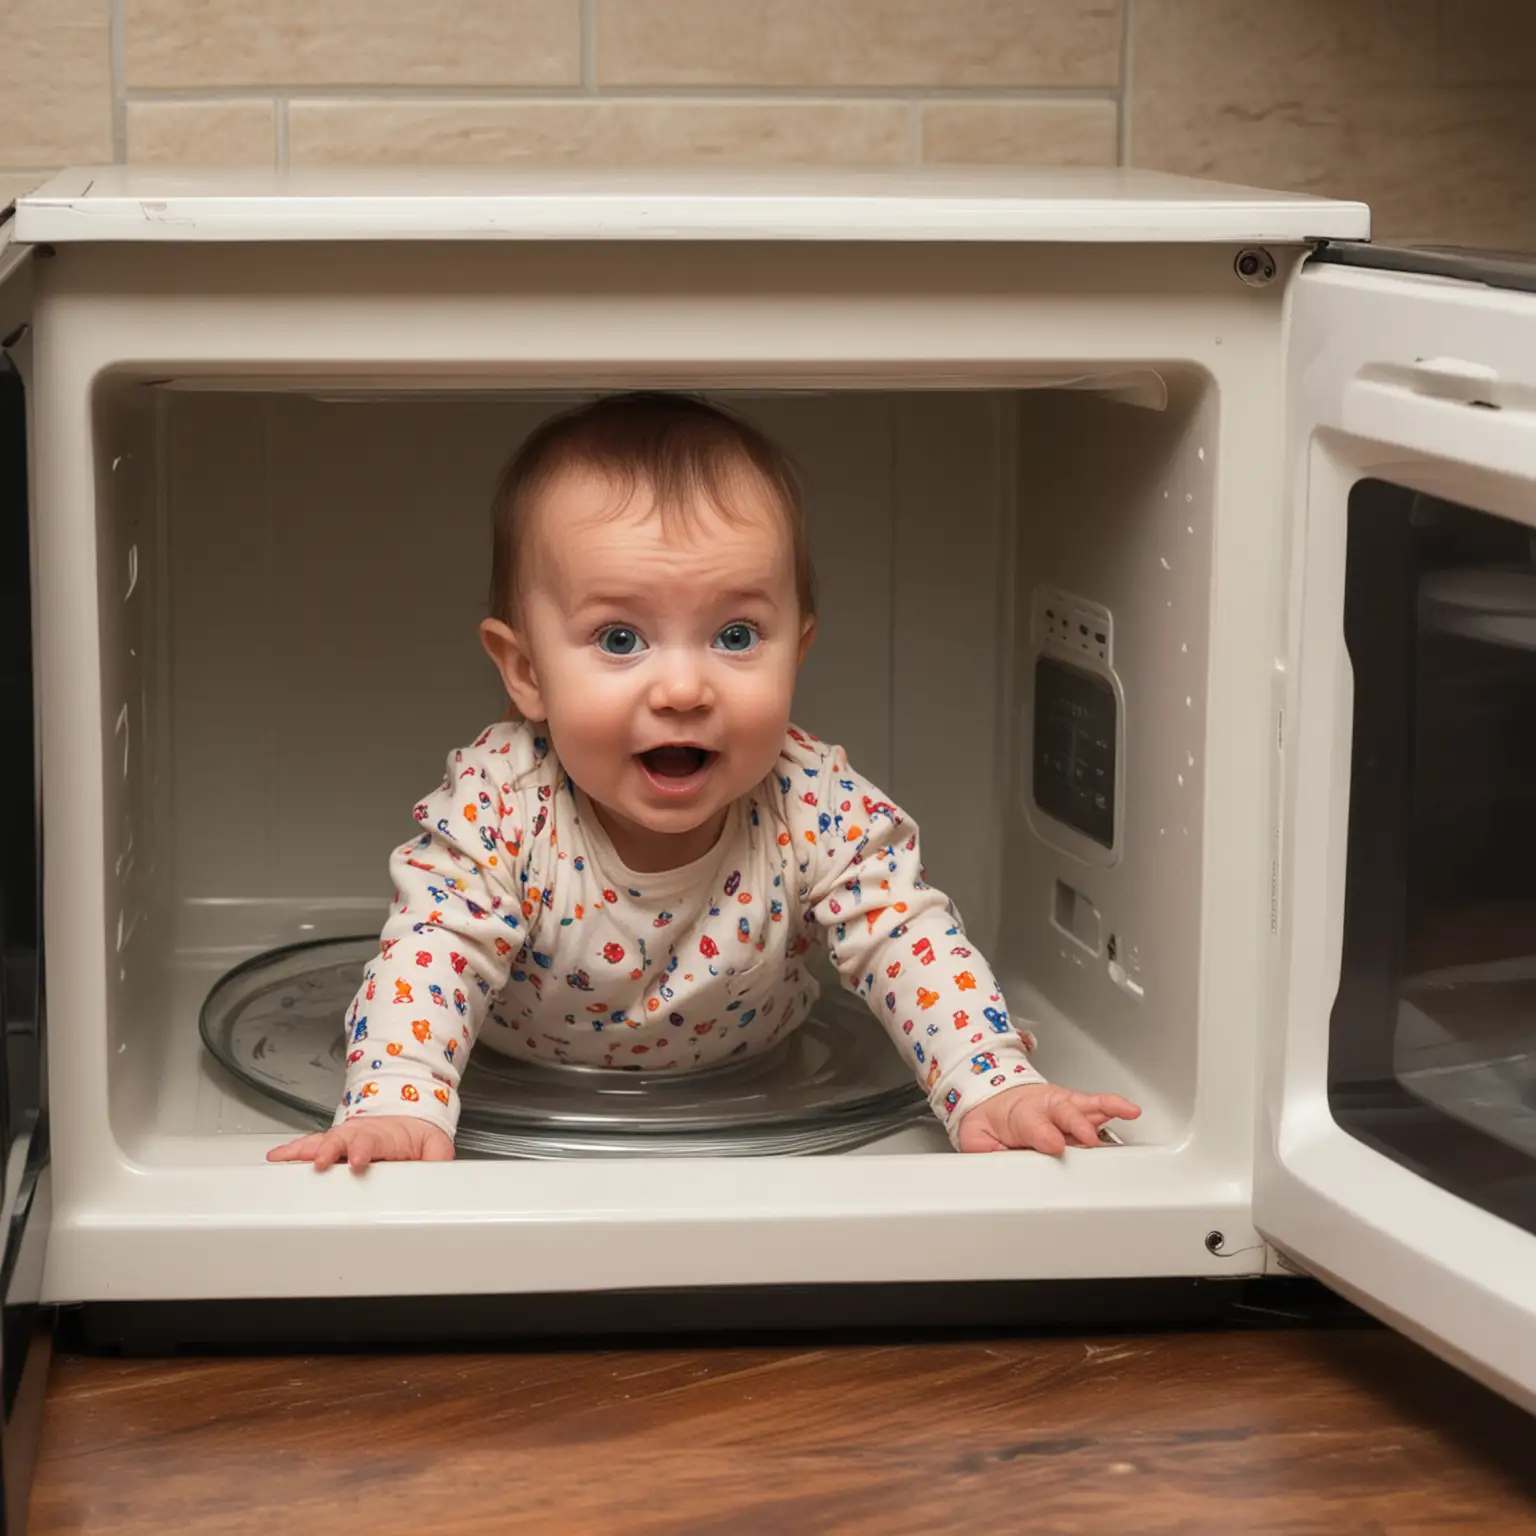 Cute Infant Playing PeekaBoo in a Modern Kitchen Appliance